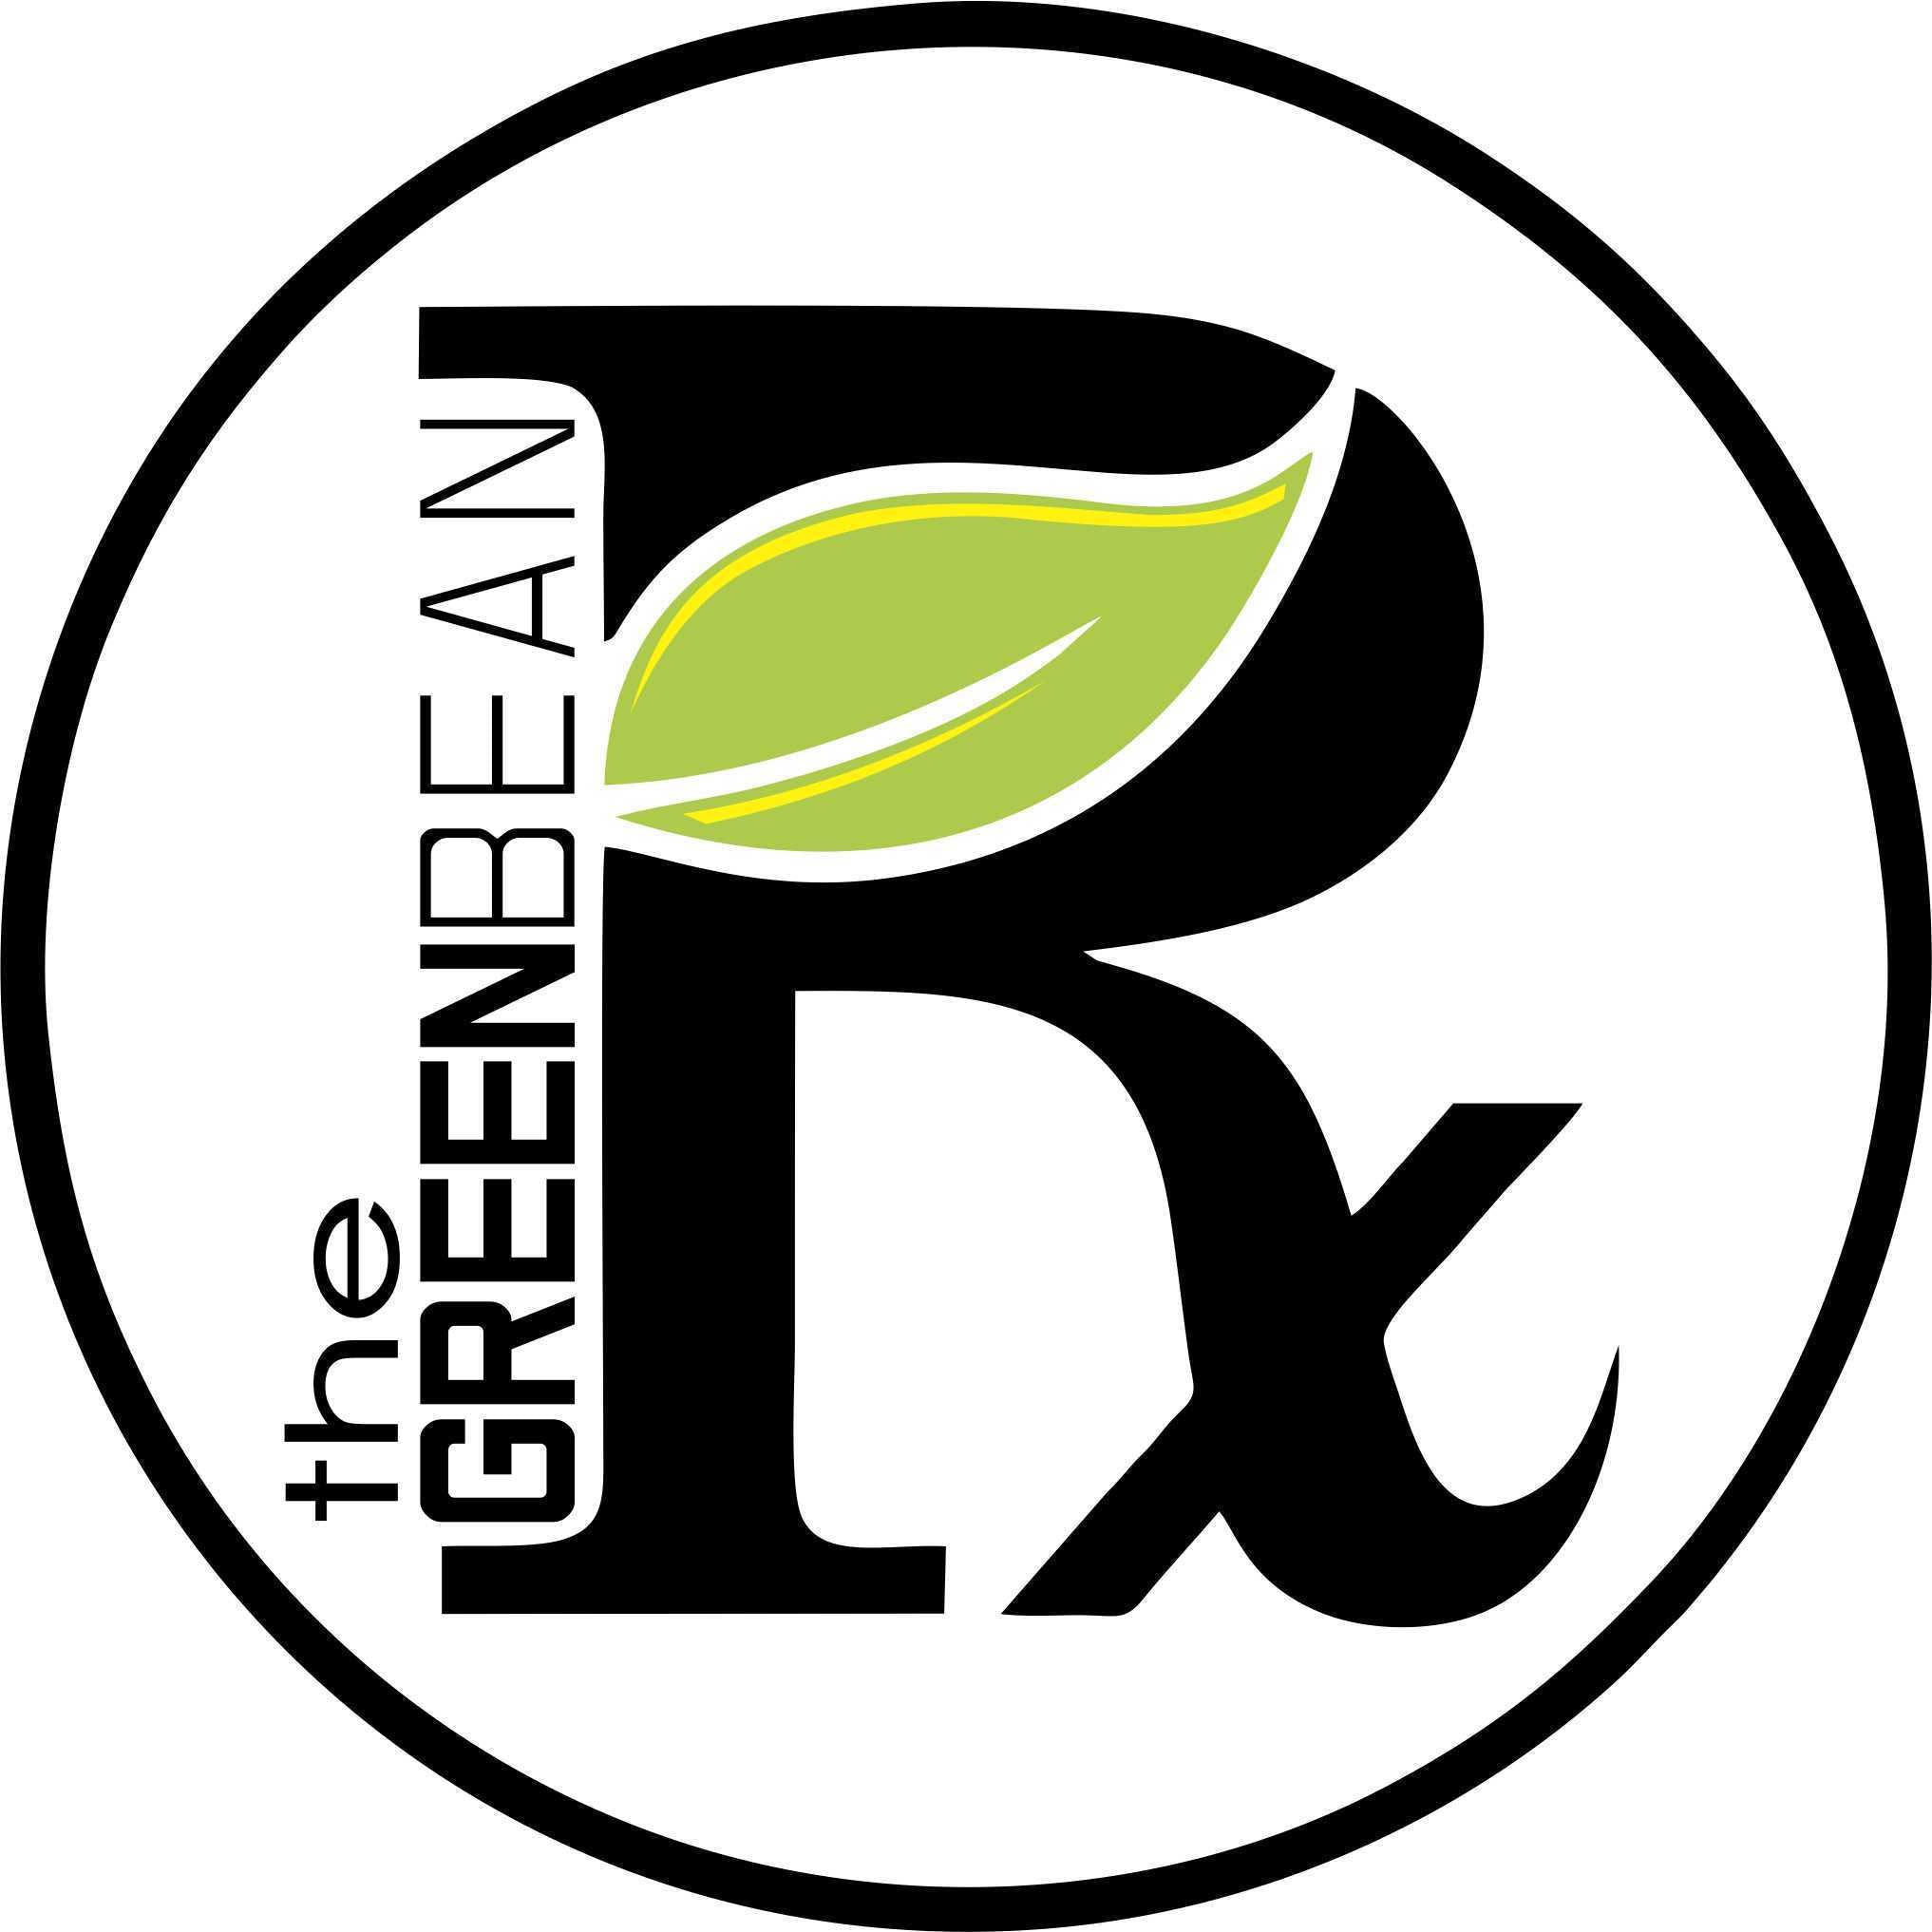 The Green Bean - GB Meds - Medical Marijuana Doctors - Cannabizme.com